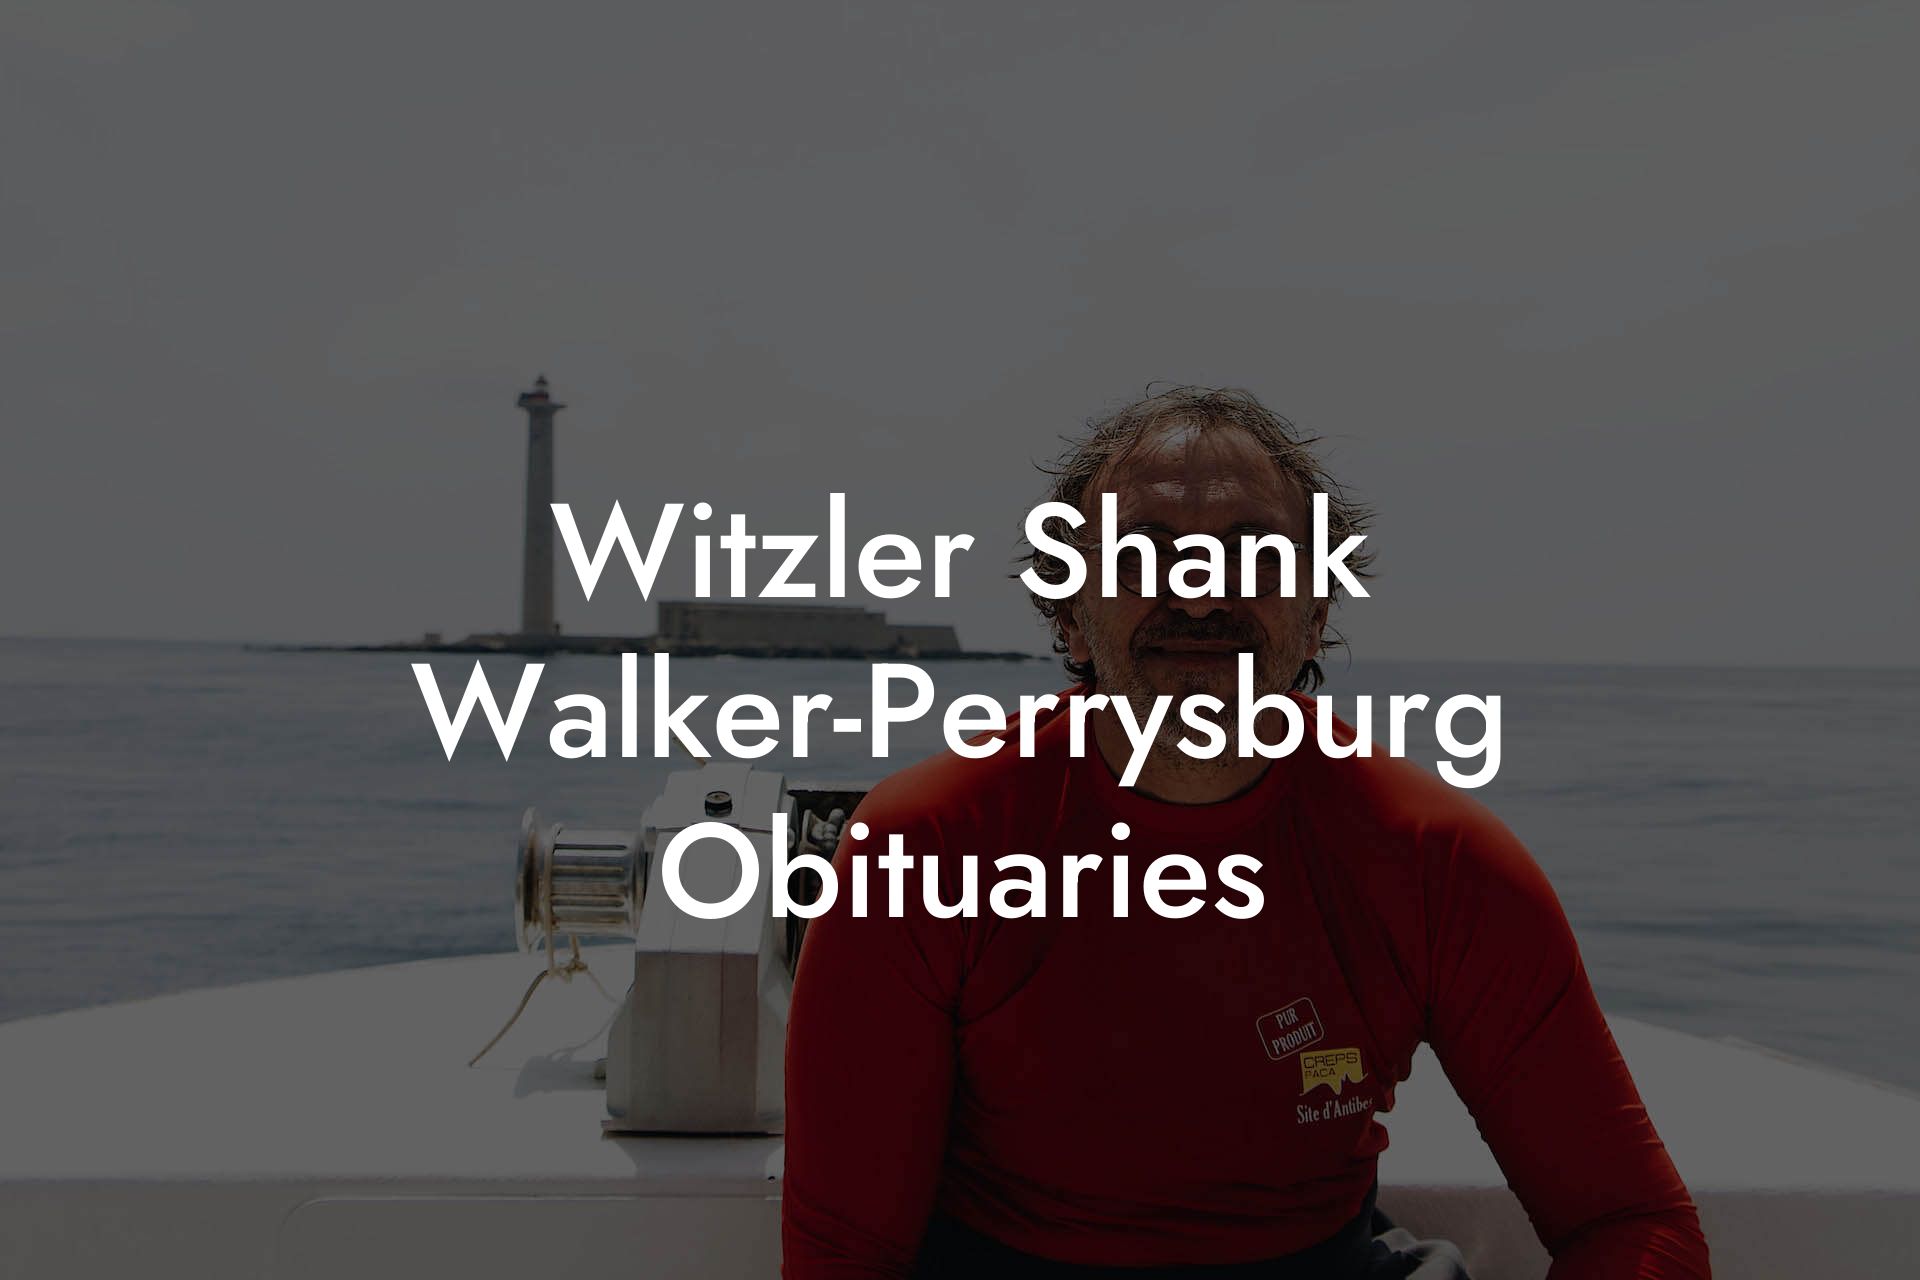 Witzler Shank Walker-Perrysburg Obituaries